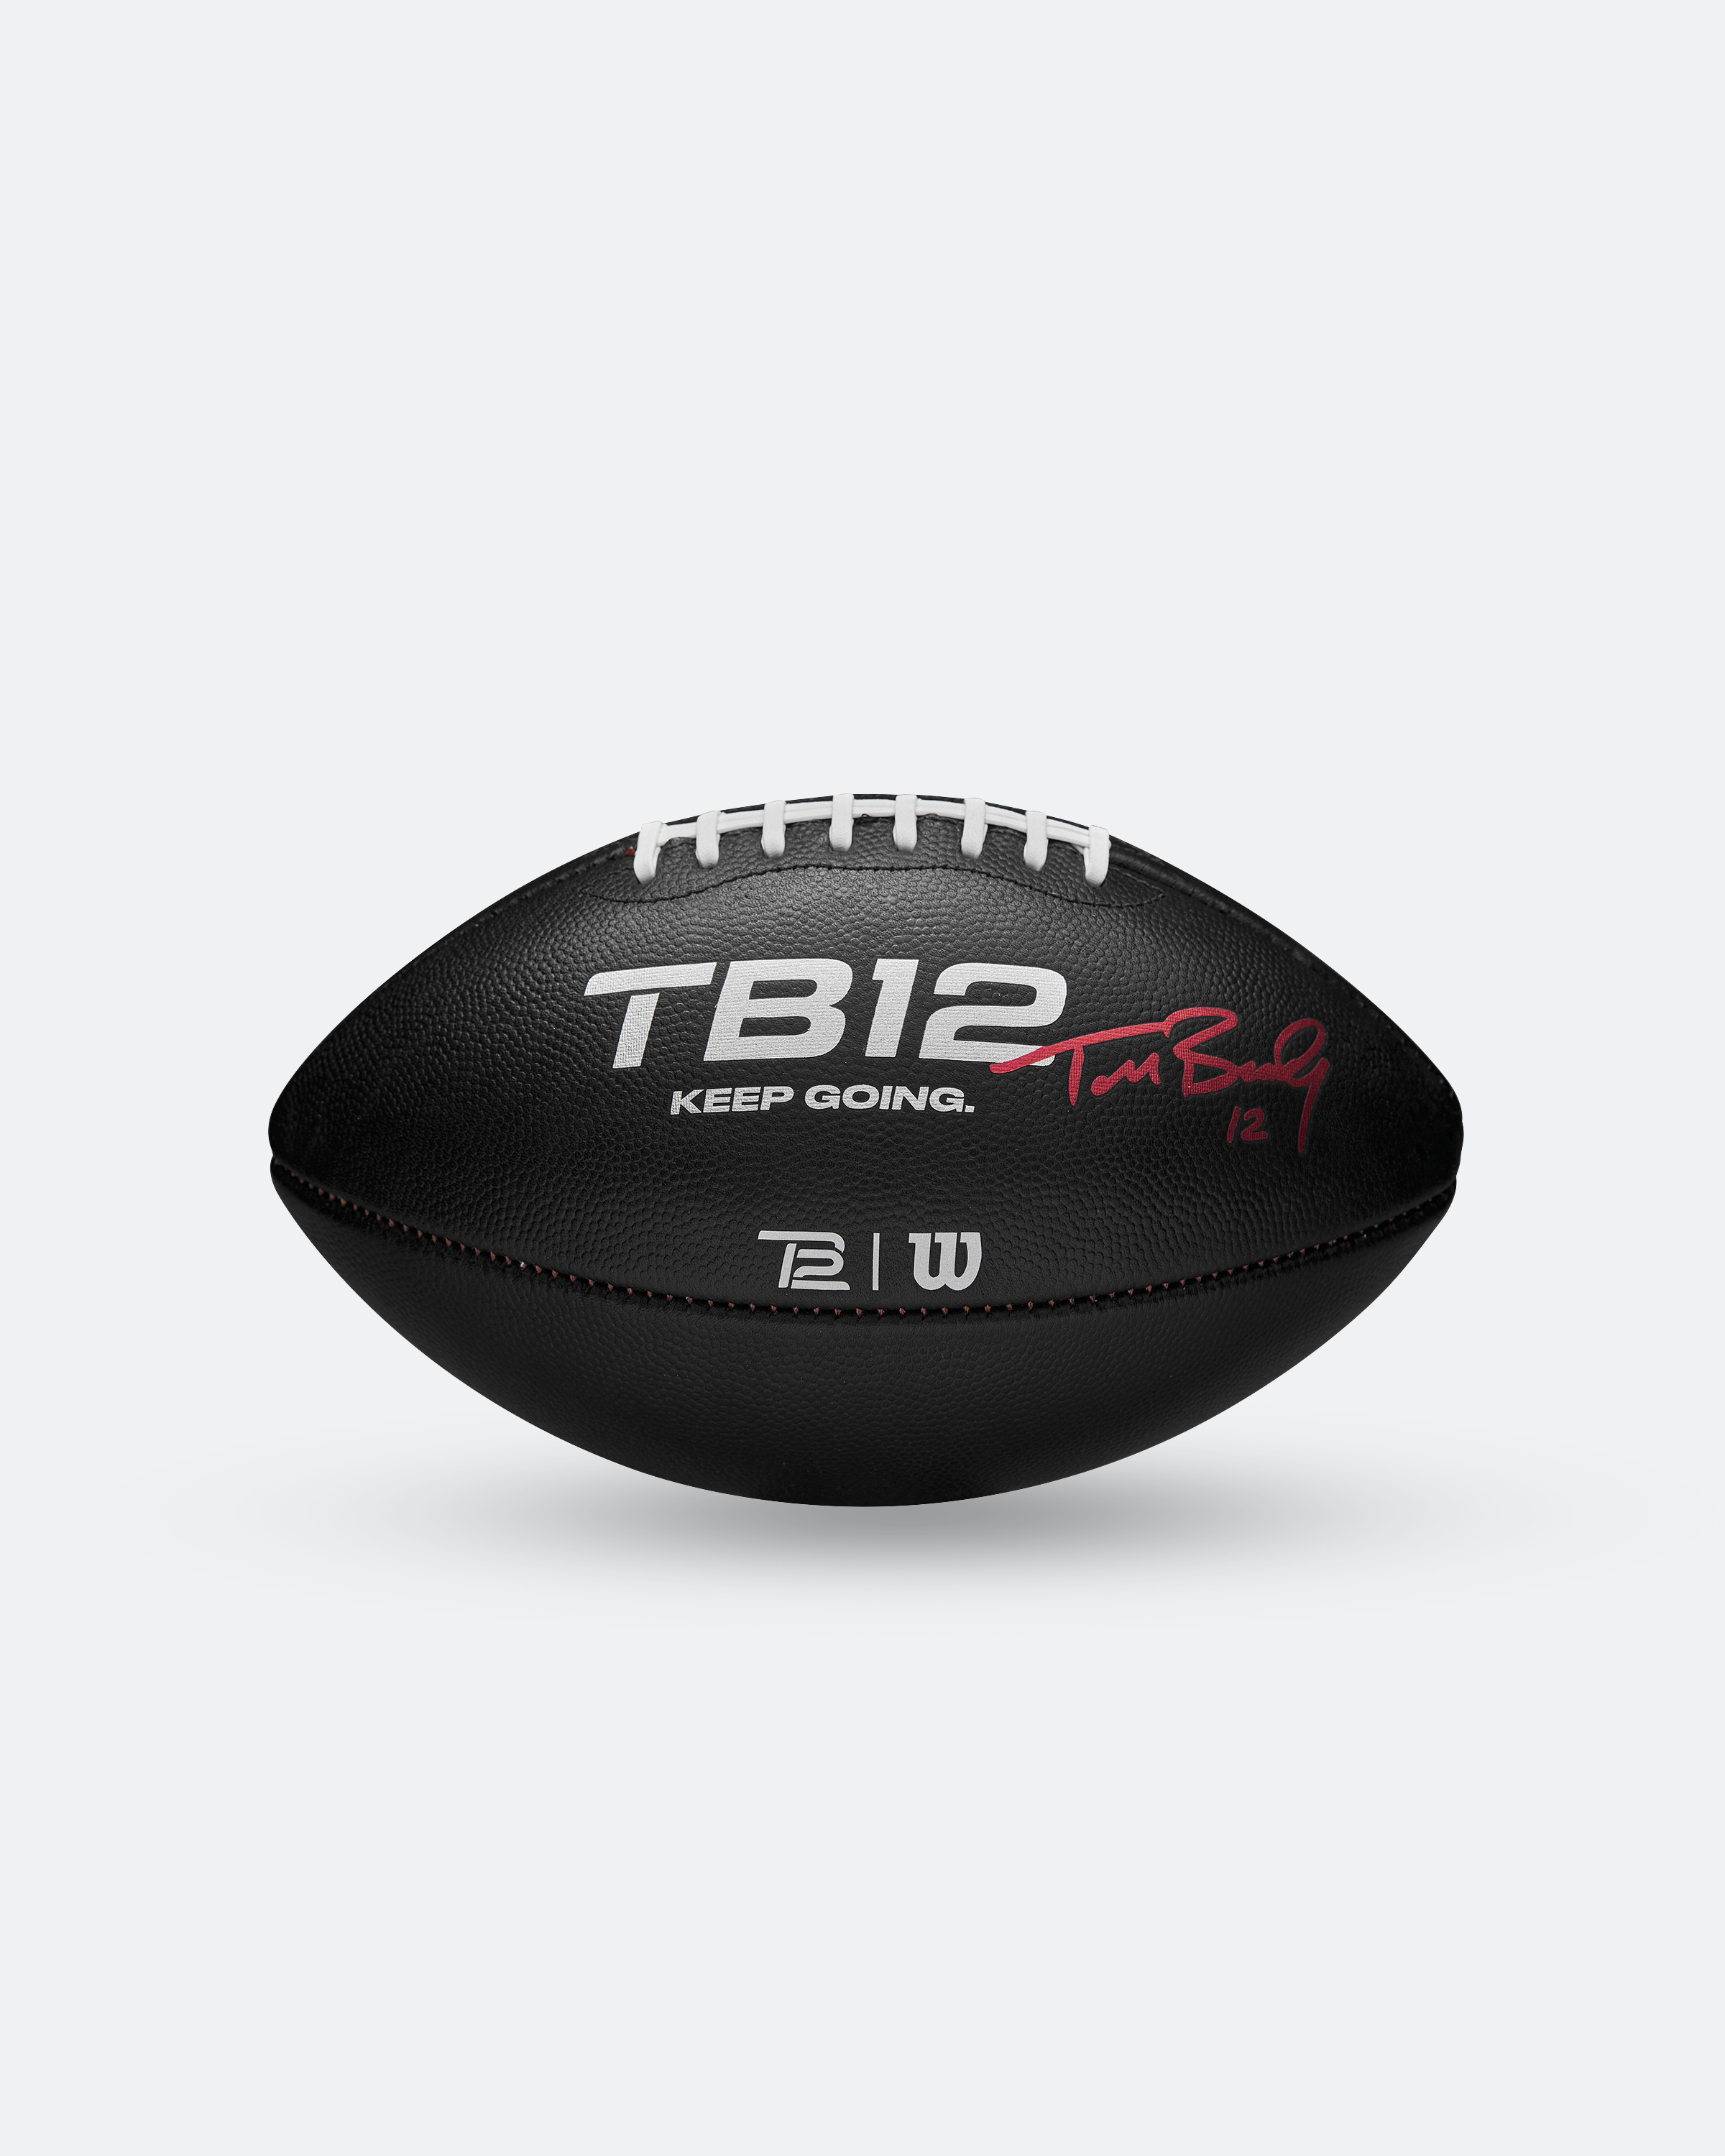 TB12 x Wilson "LFG" Limited Edition Football